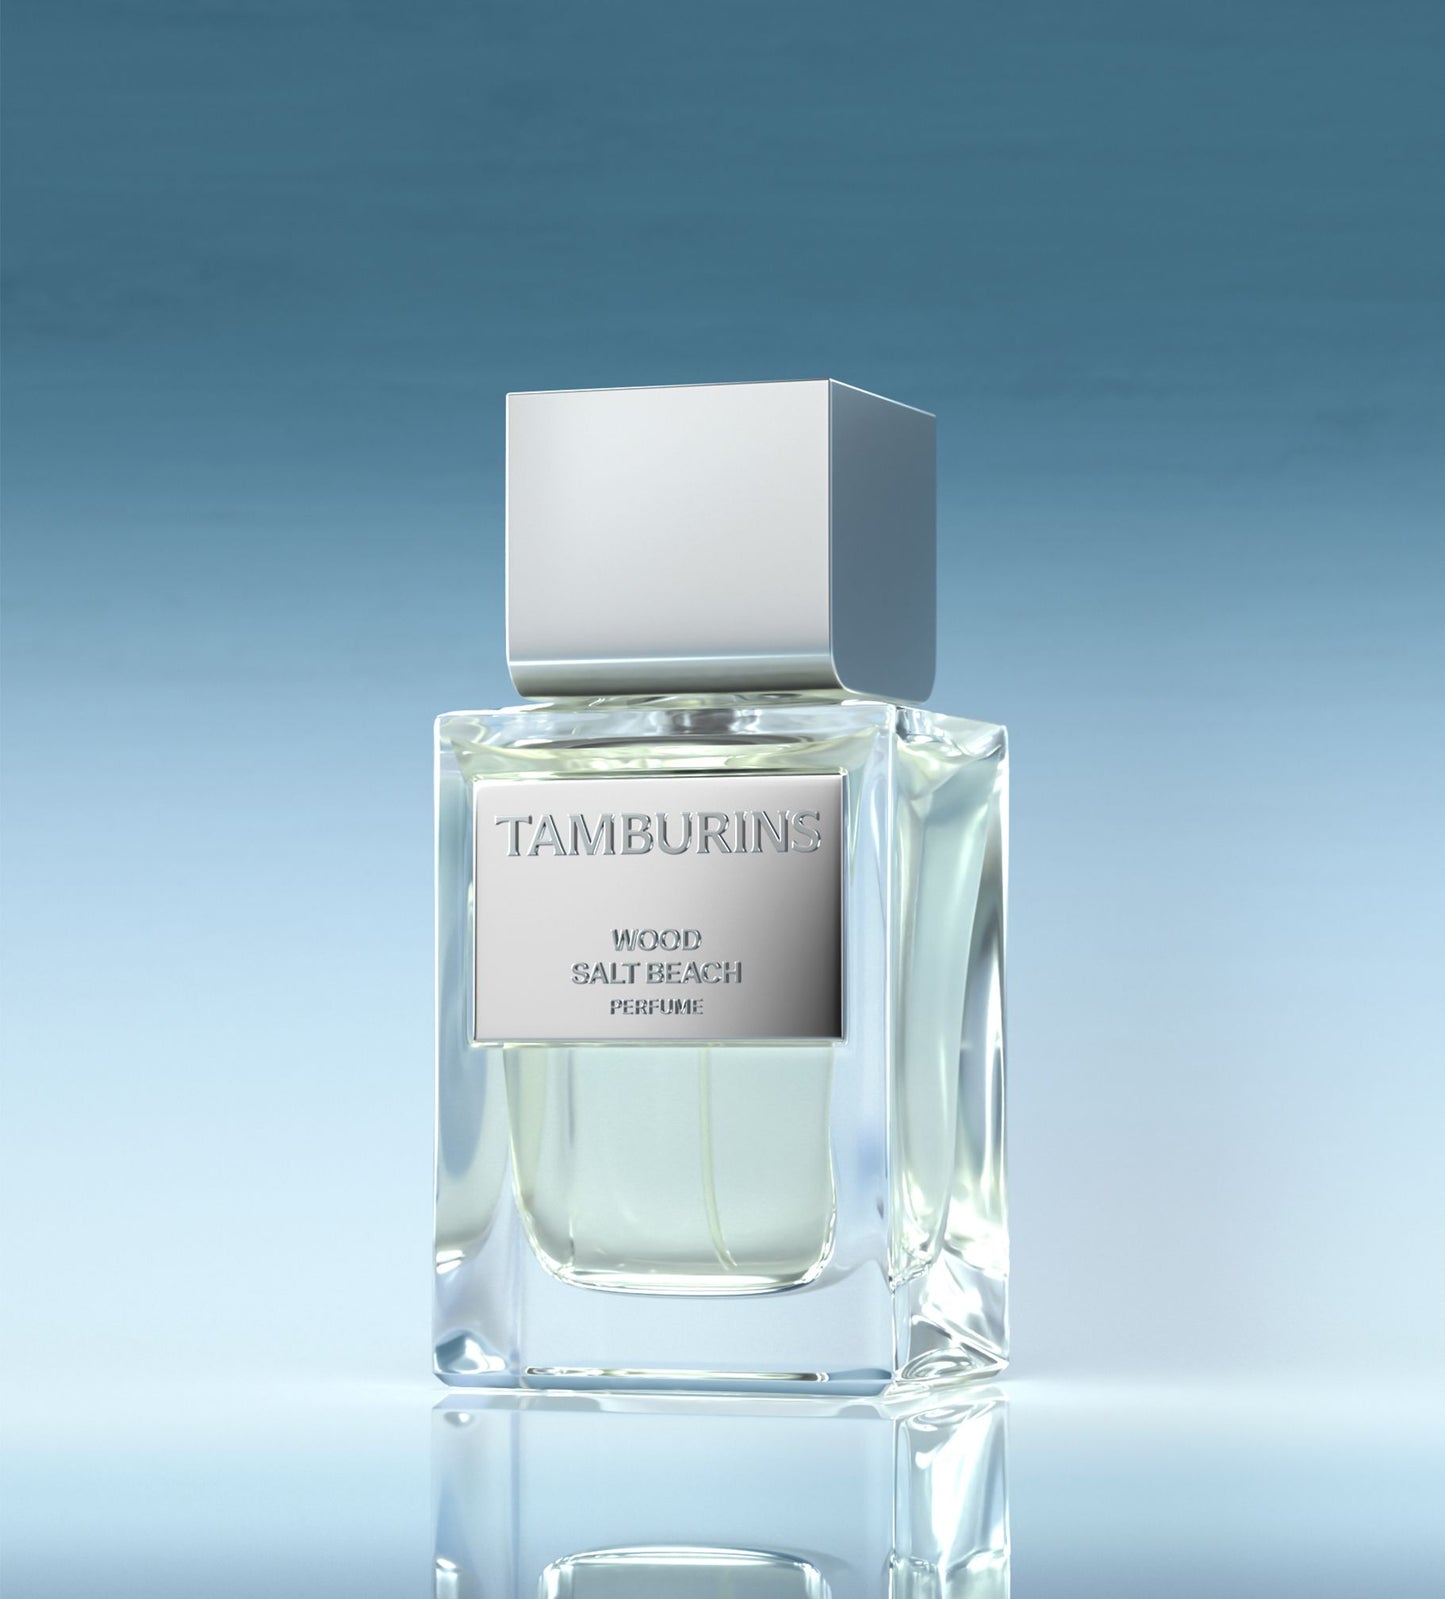 TAMBURINS Perfume Wood Salt Beach